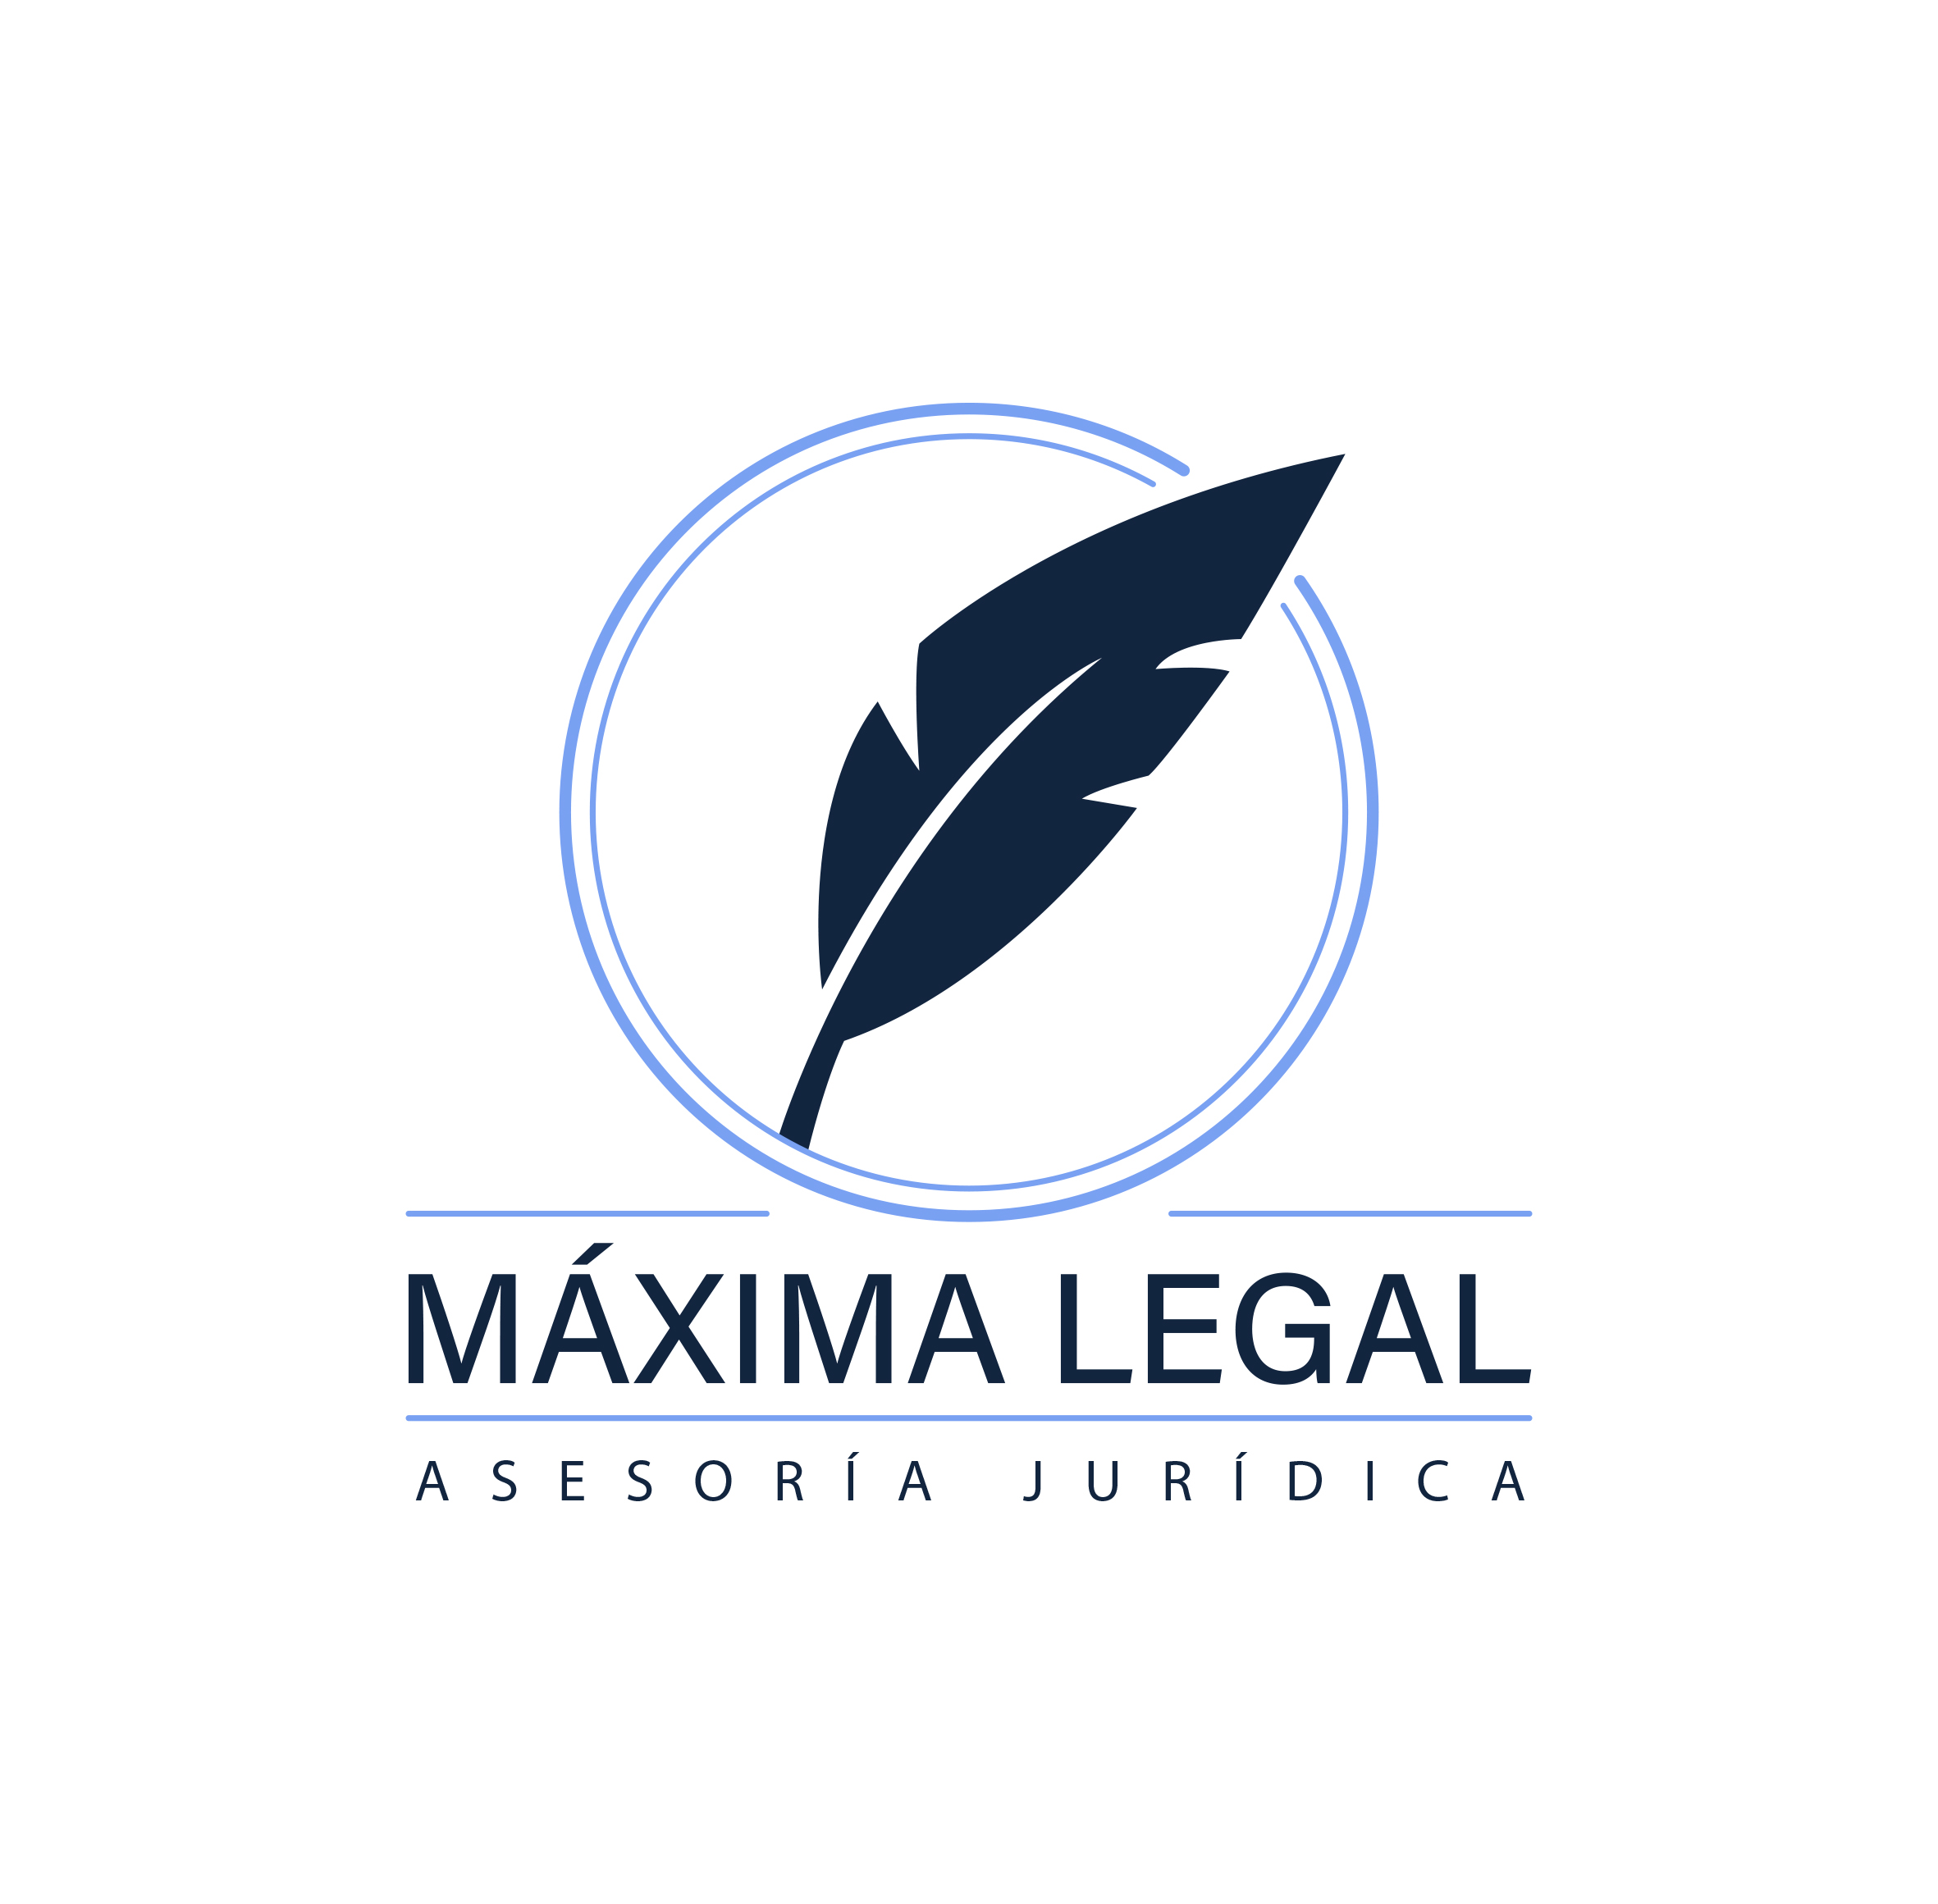 Maxima Legal